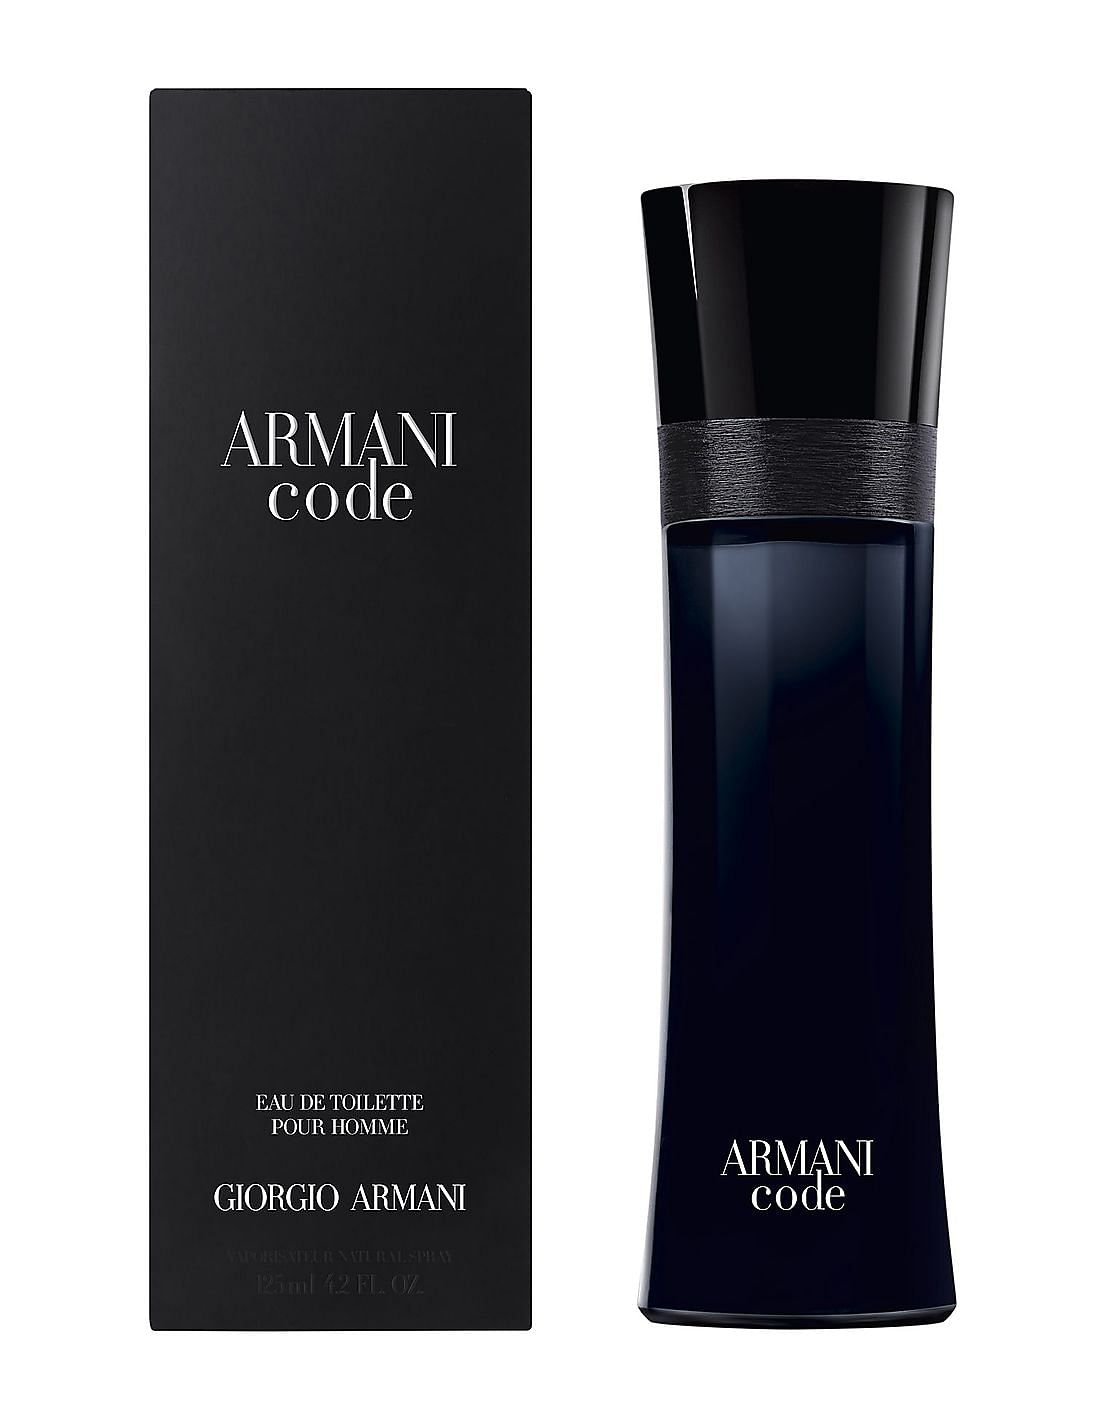 Buy GIORGIO ARMANI Armani Code Eau De Toilette Pour Homme 